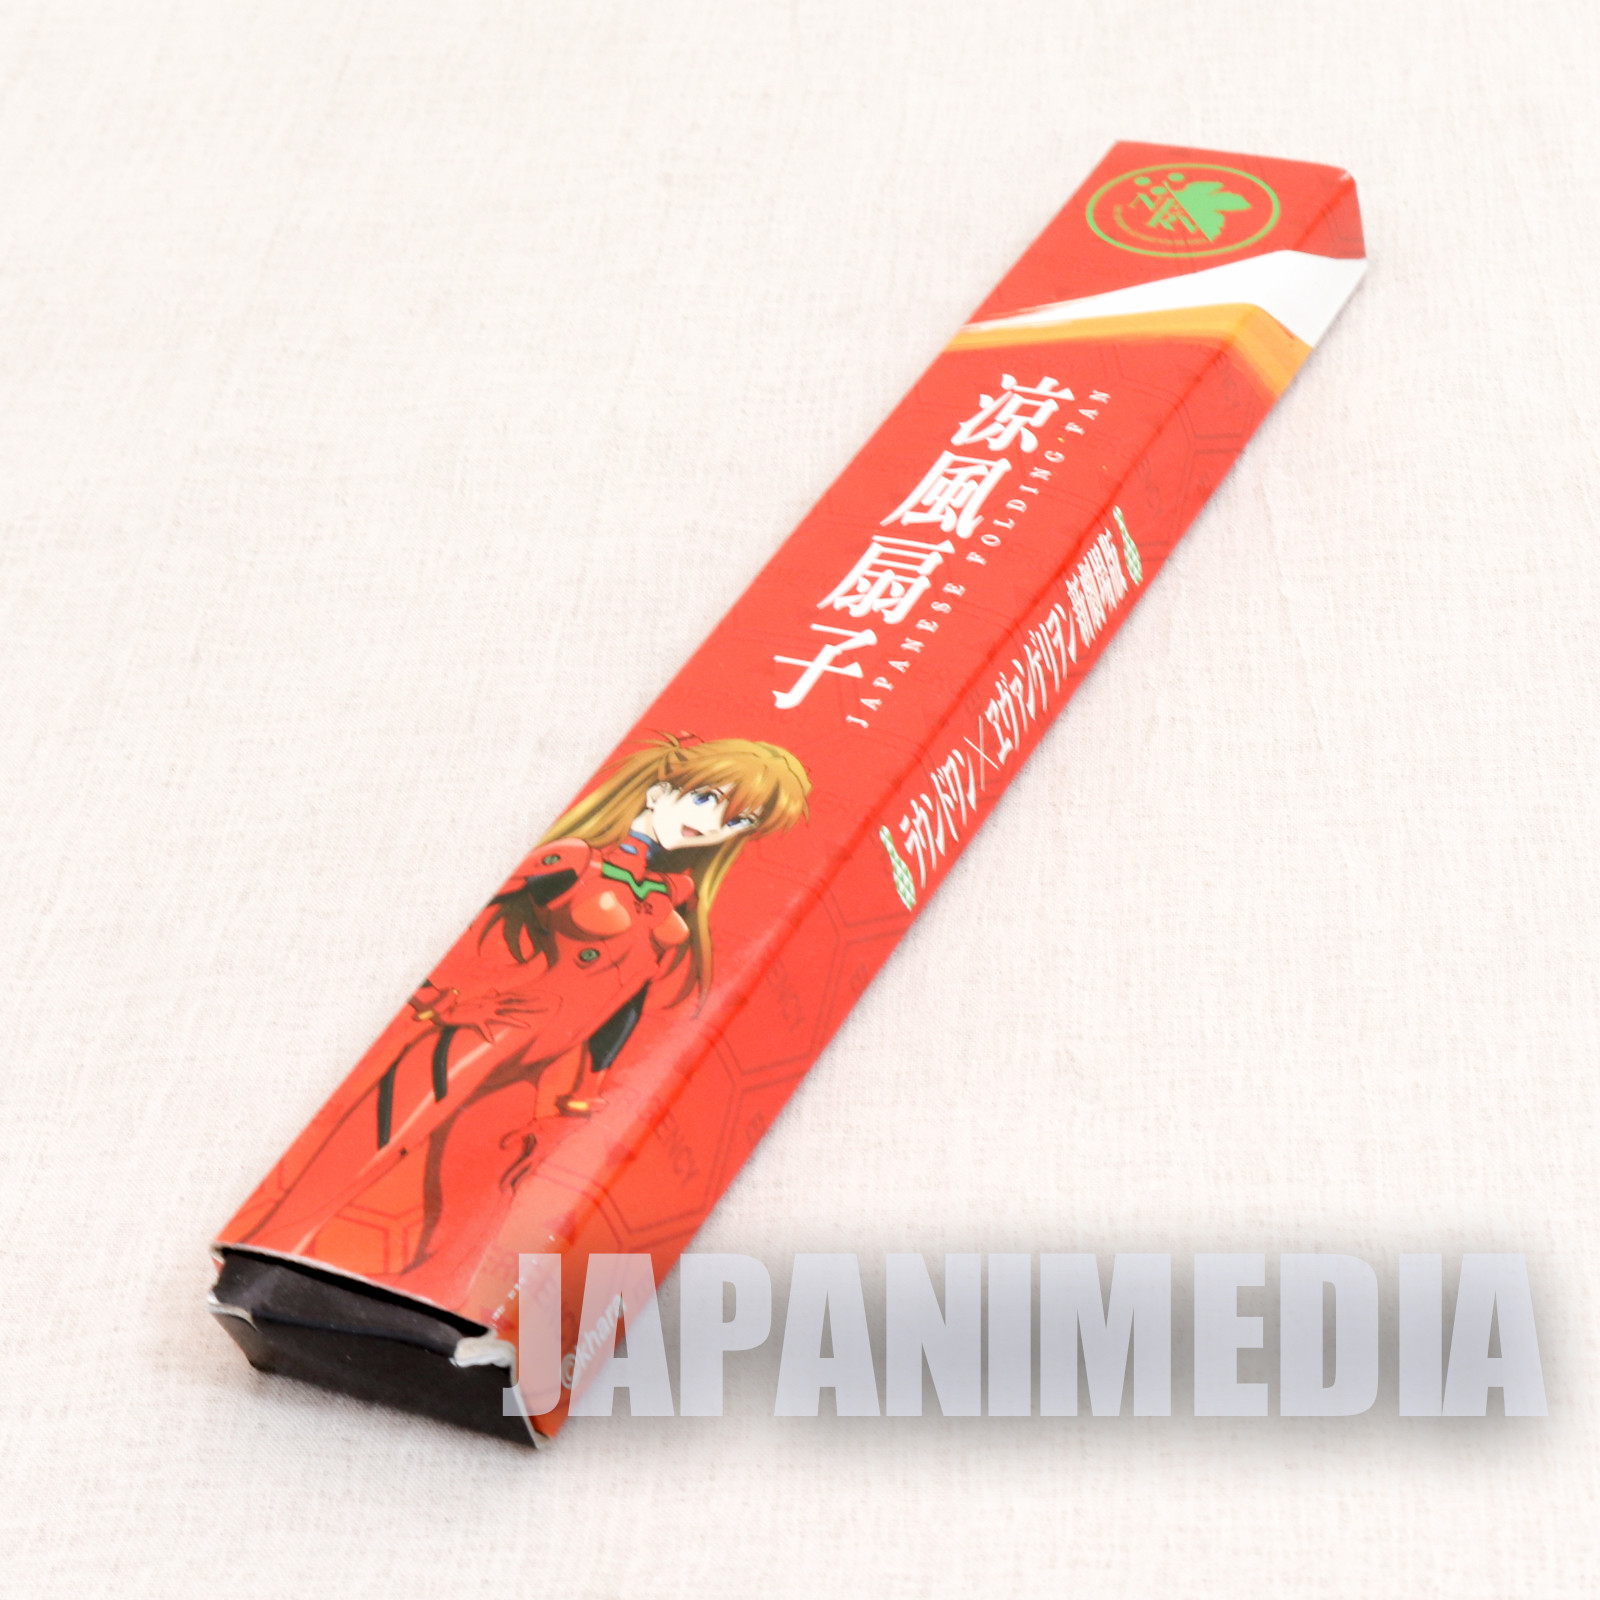 Evangelion Asuka Langley Plugsuit Folding Fan Japanese Sensu JAPAN ANIME